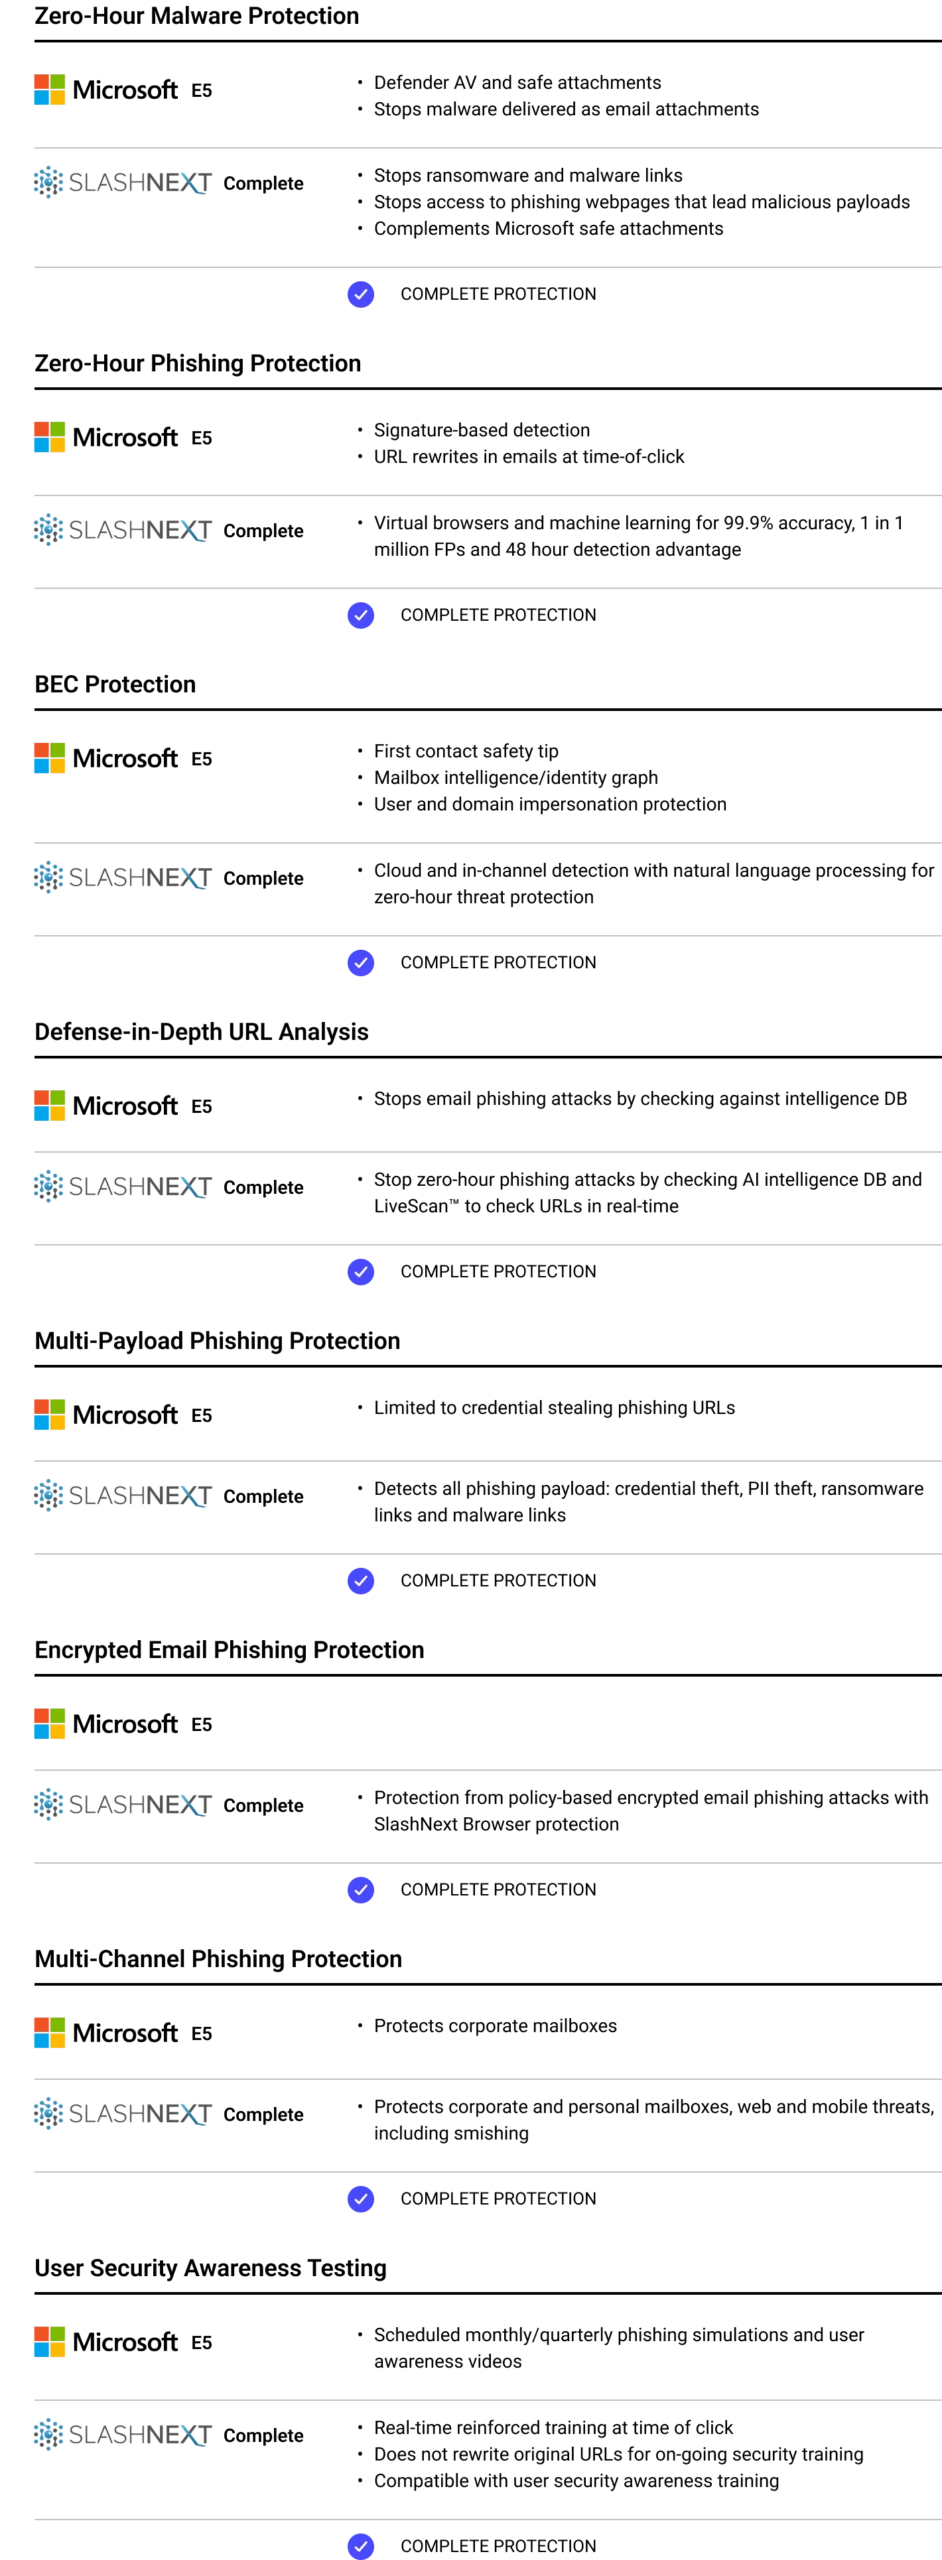 SlashNext + Microsoft Comparison Table